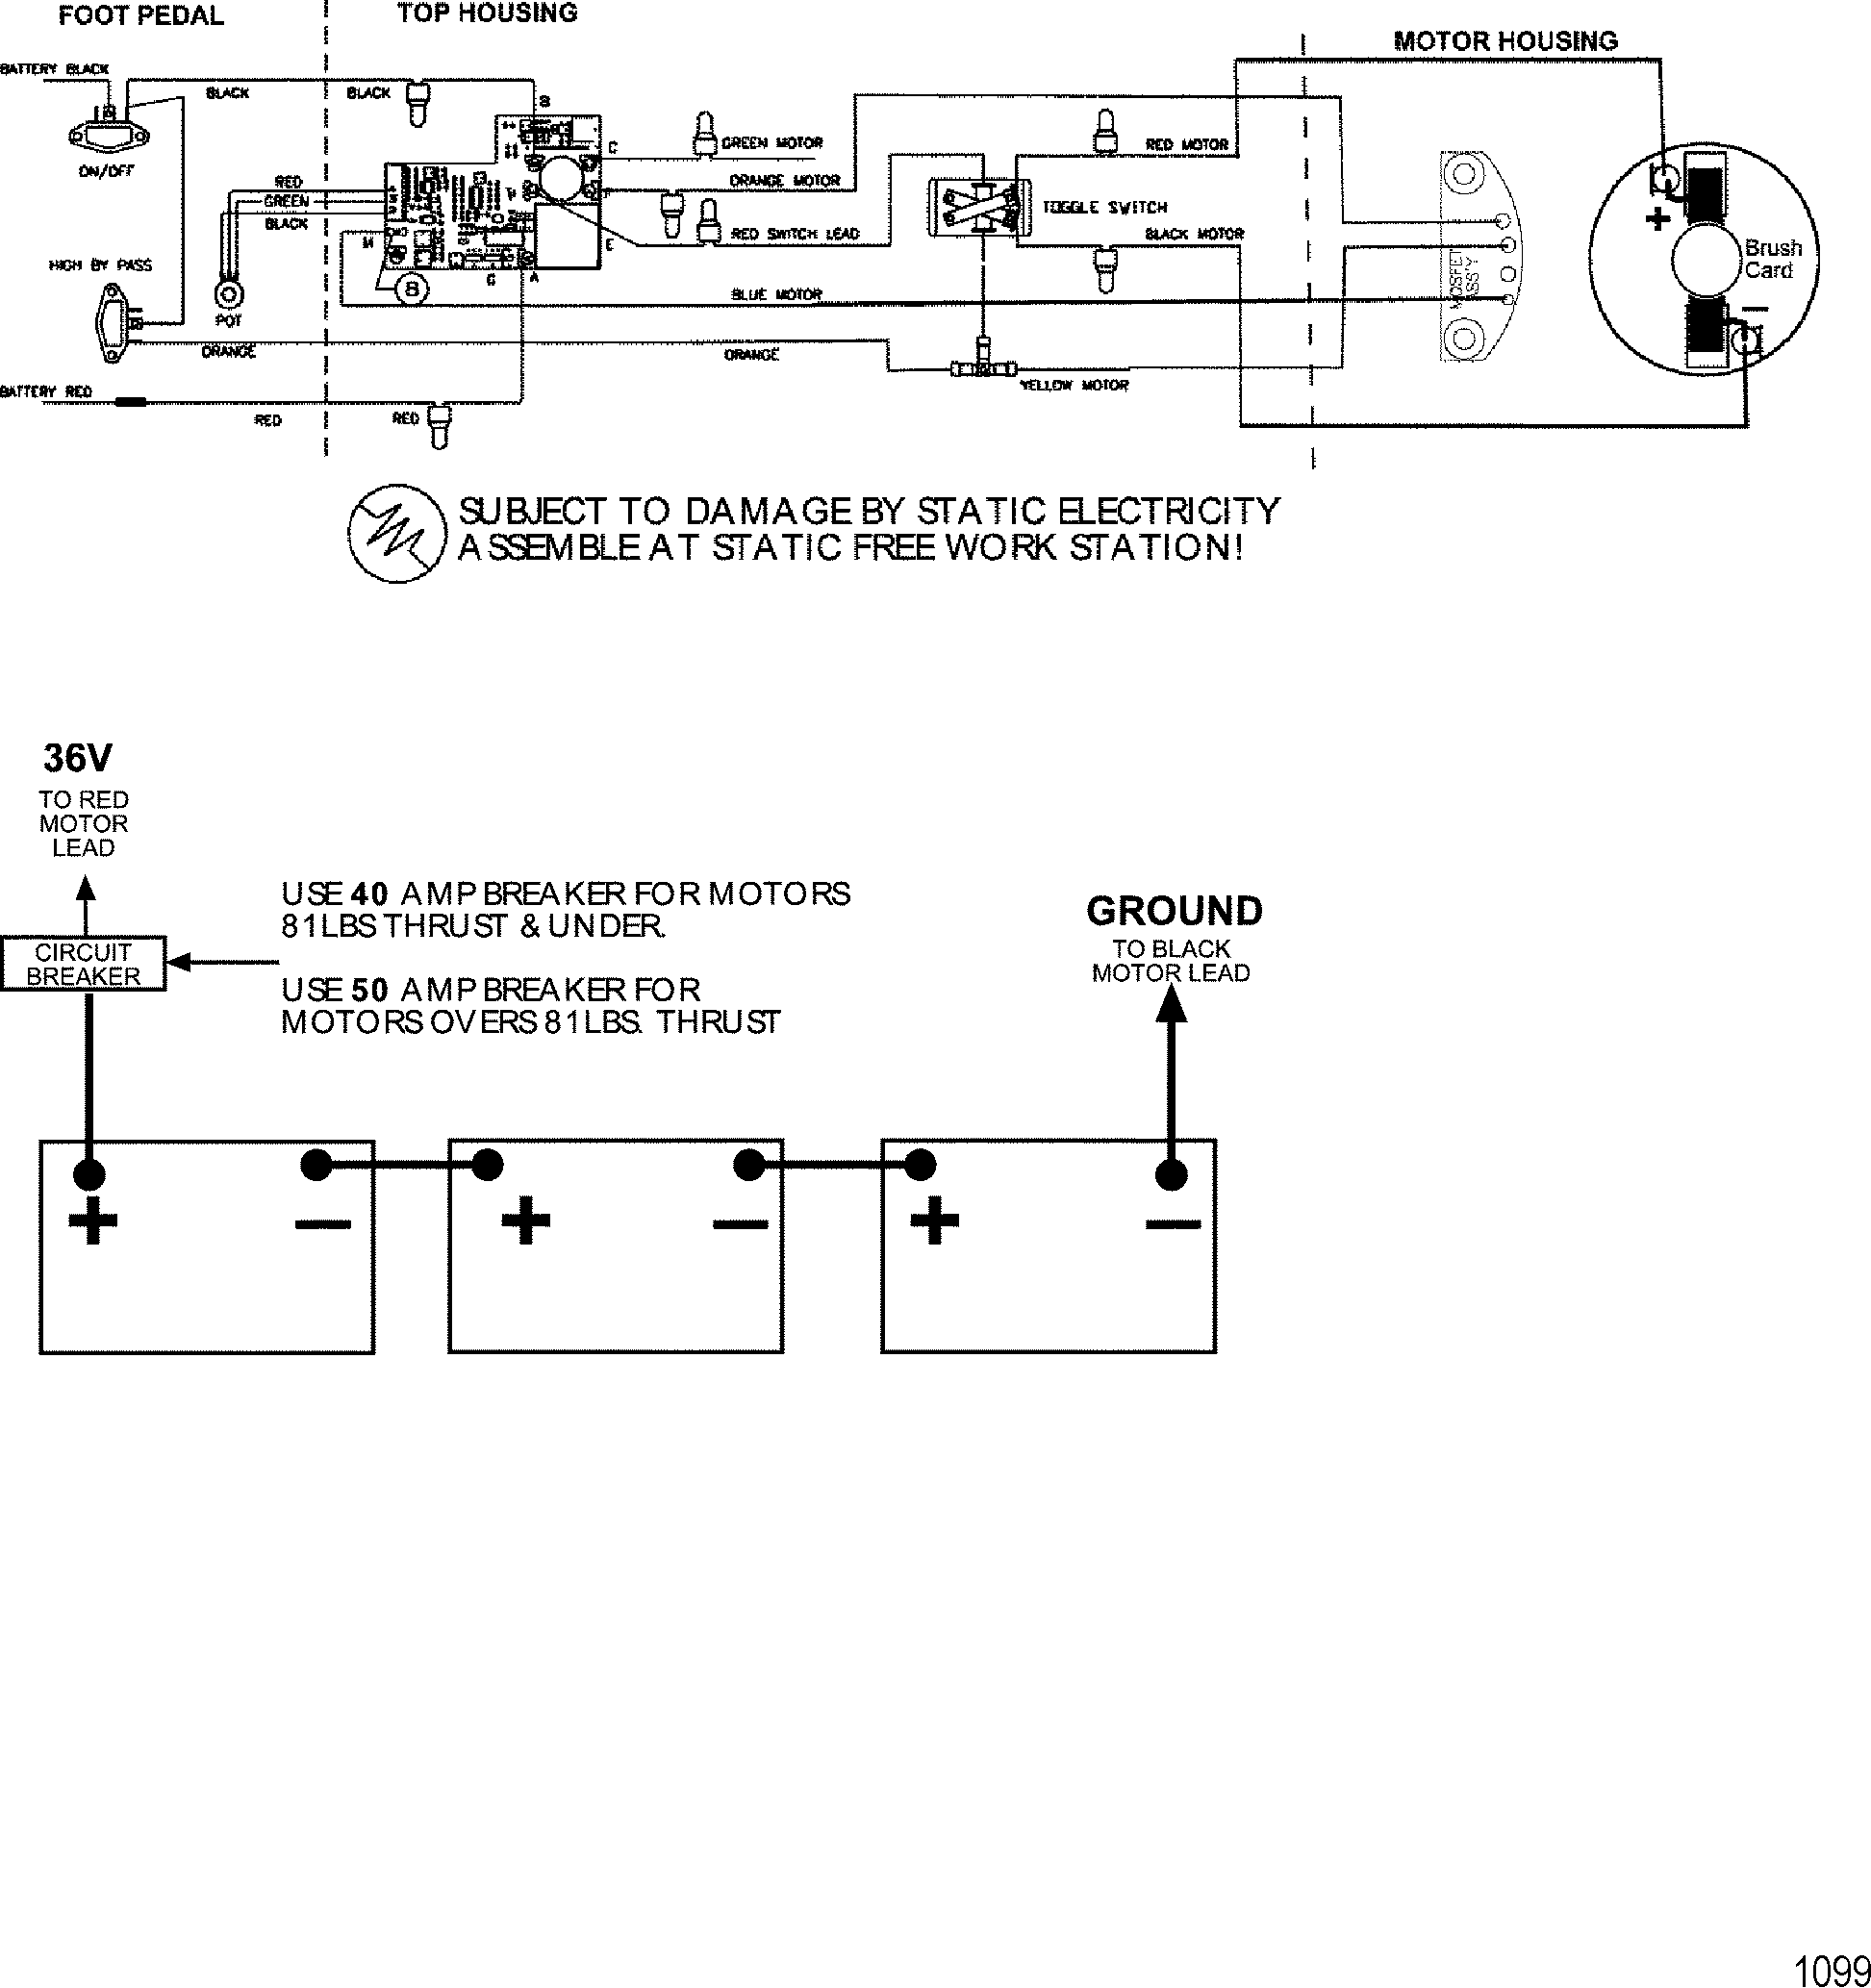 motorguide fw 46 wiring diagram